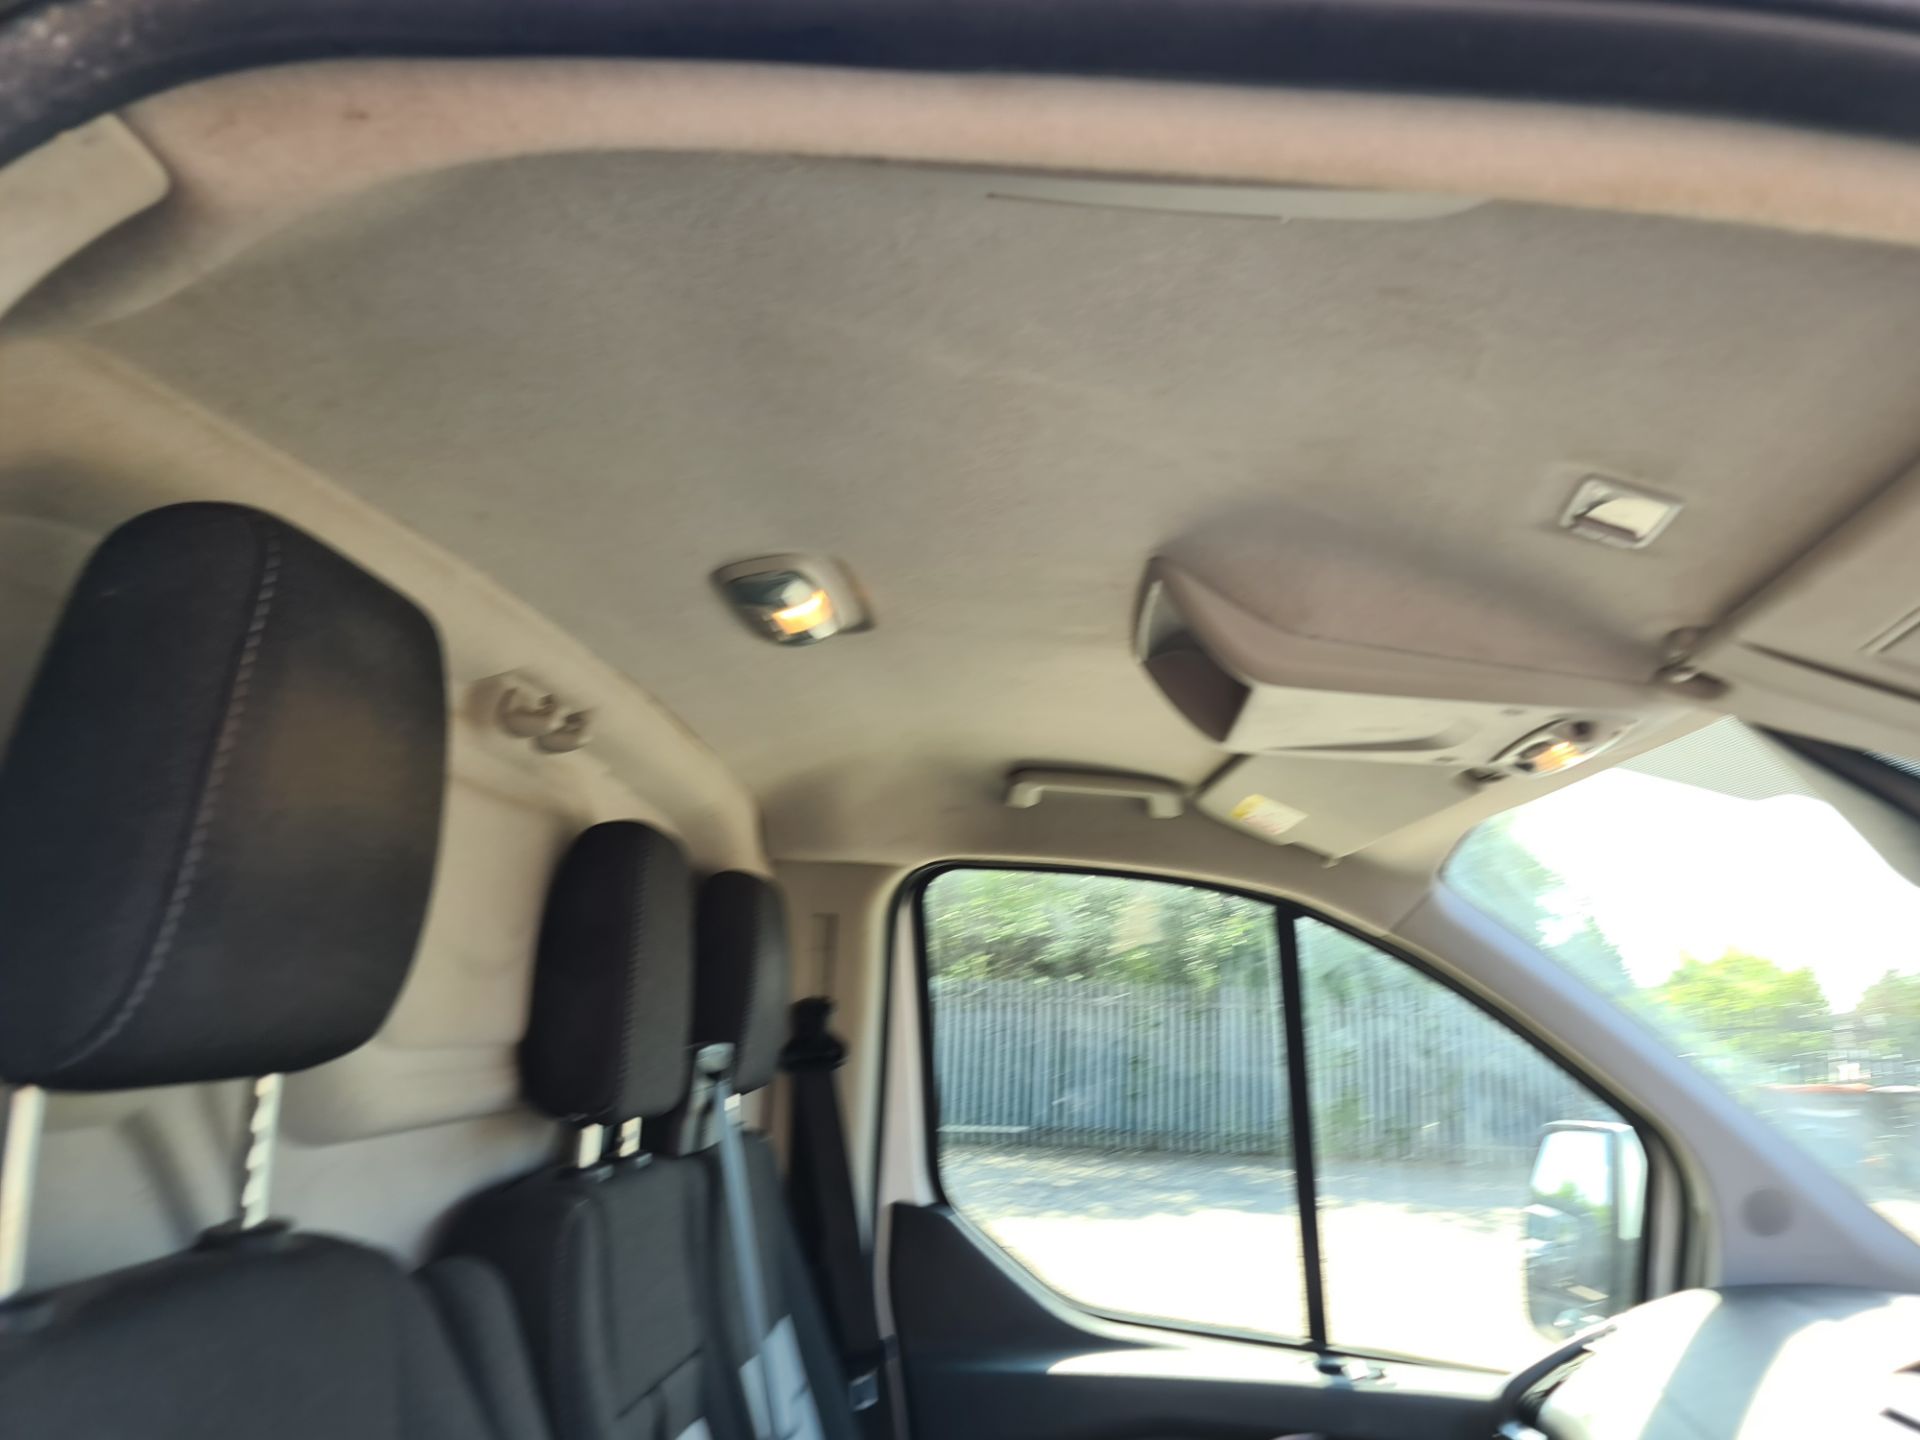 2016 Ford Transit Custom 290 LTD E-Tech panel van - Image 30 of 74